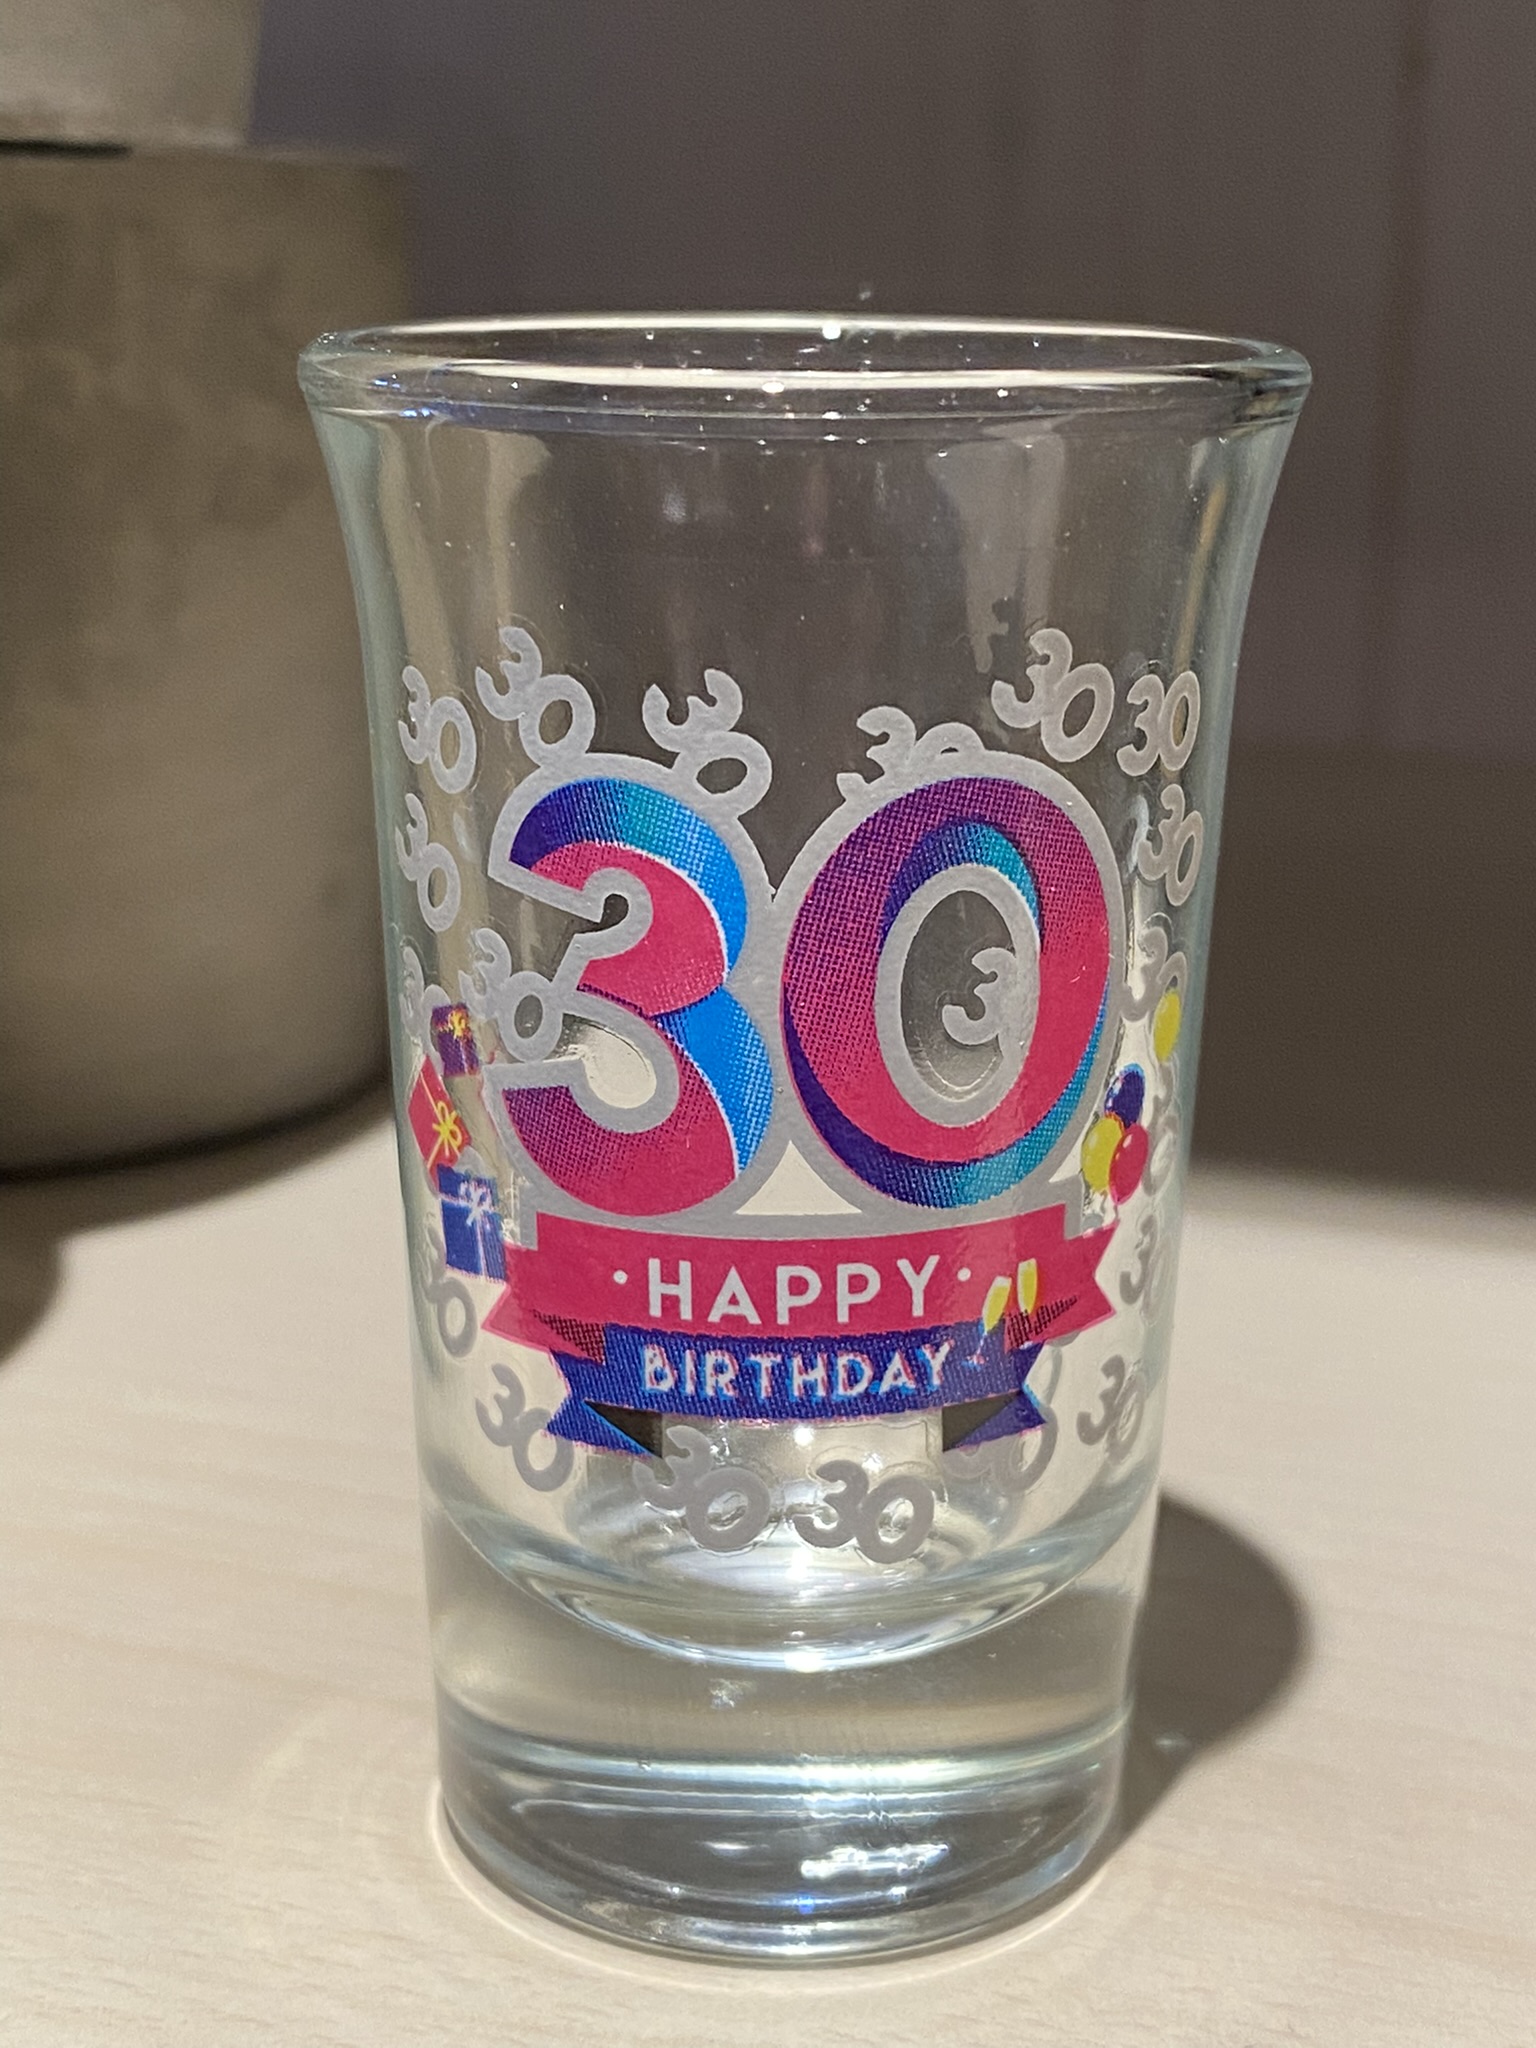 Schnapsglas -  Shotglas - 30. Geburtstag